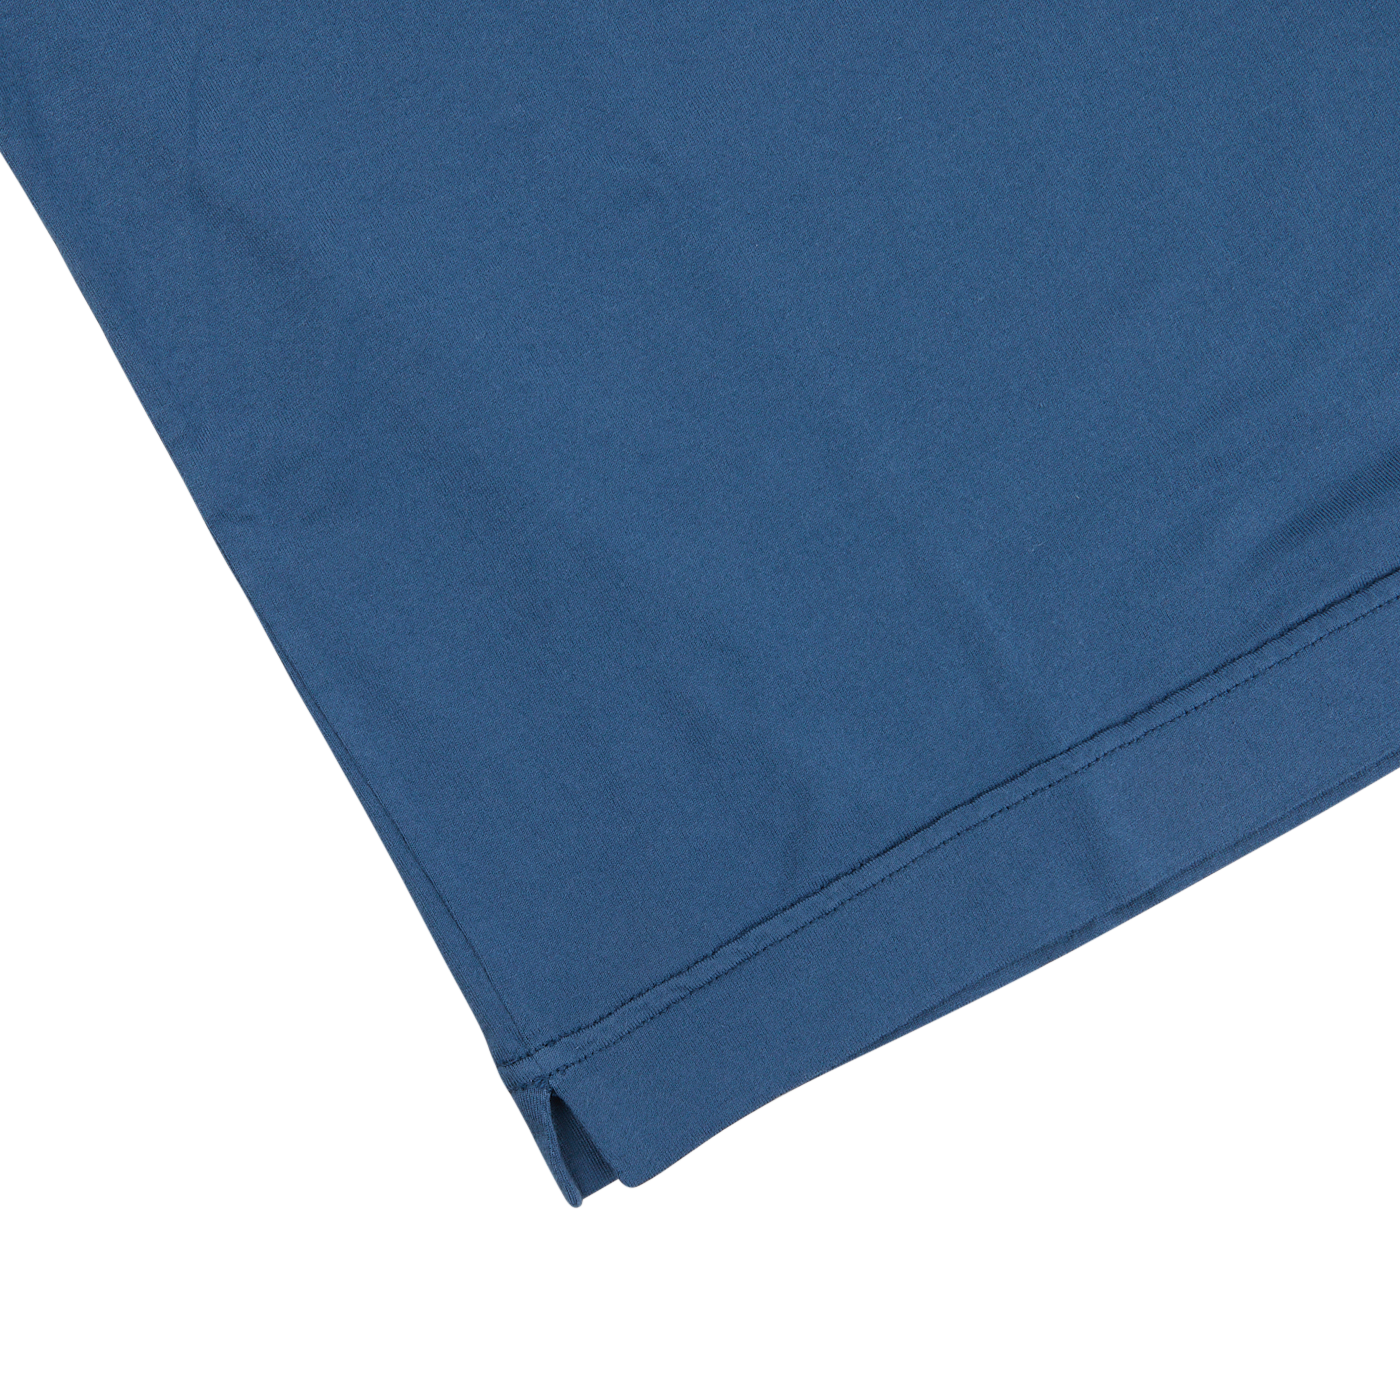 A luxury Indigo Blue Organic Cotton T-shirt by Fedeli on a white surface.